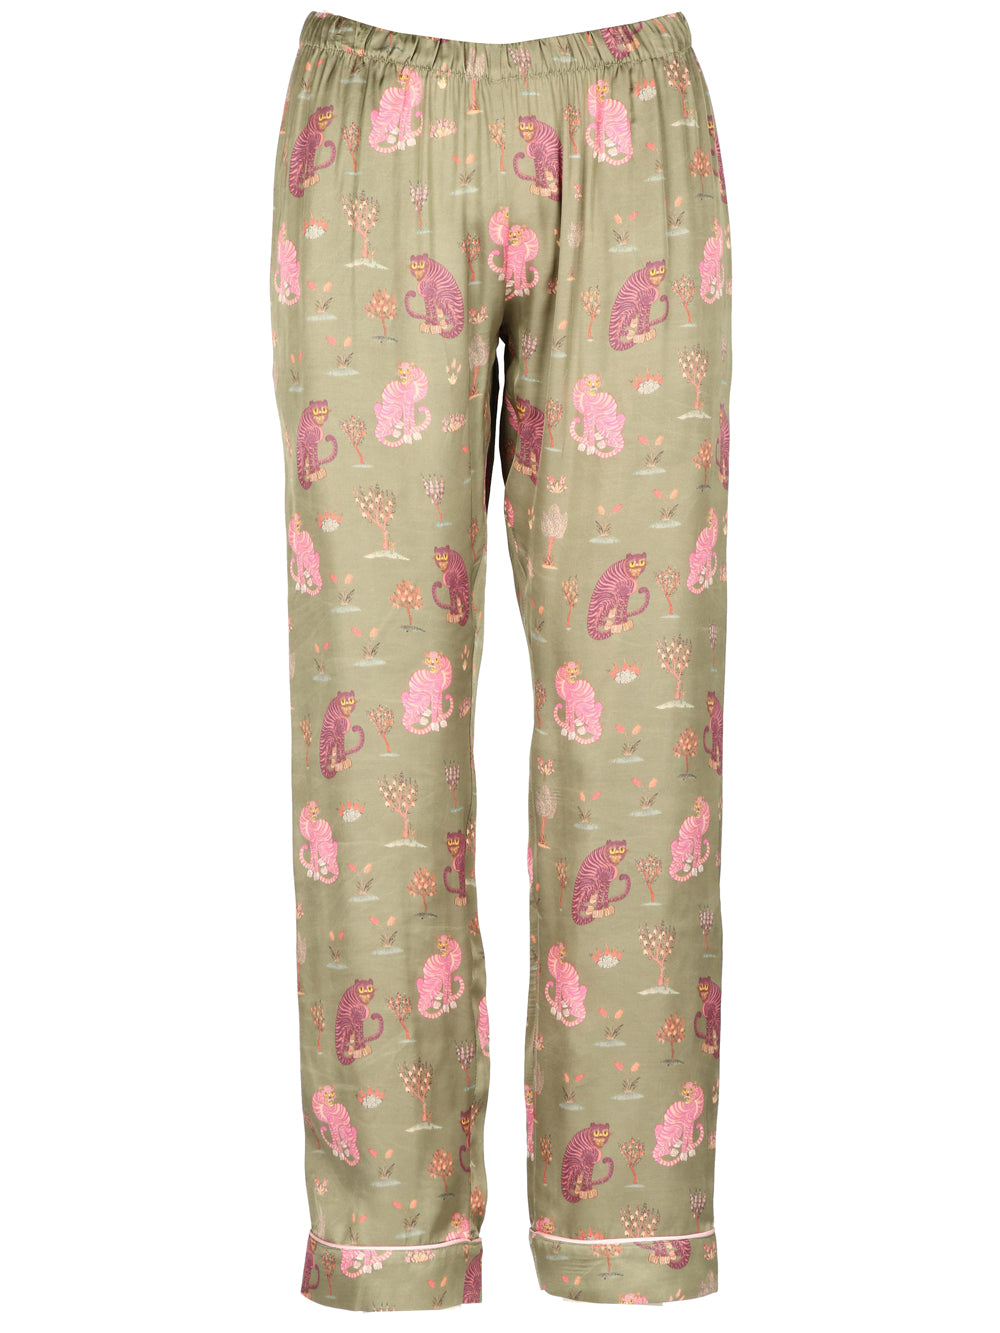 LISA C. Pantalone Daiquiri in Seta Verde Militare con Tigri Rosa Verde/rosa